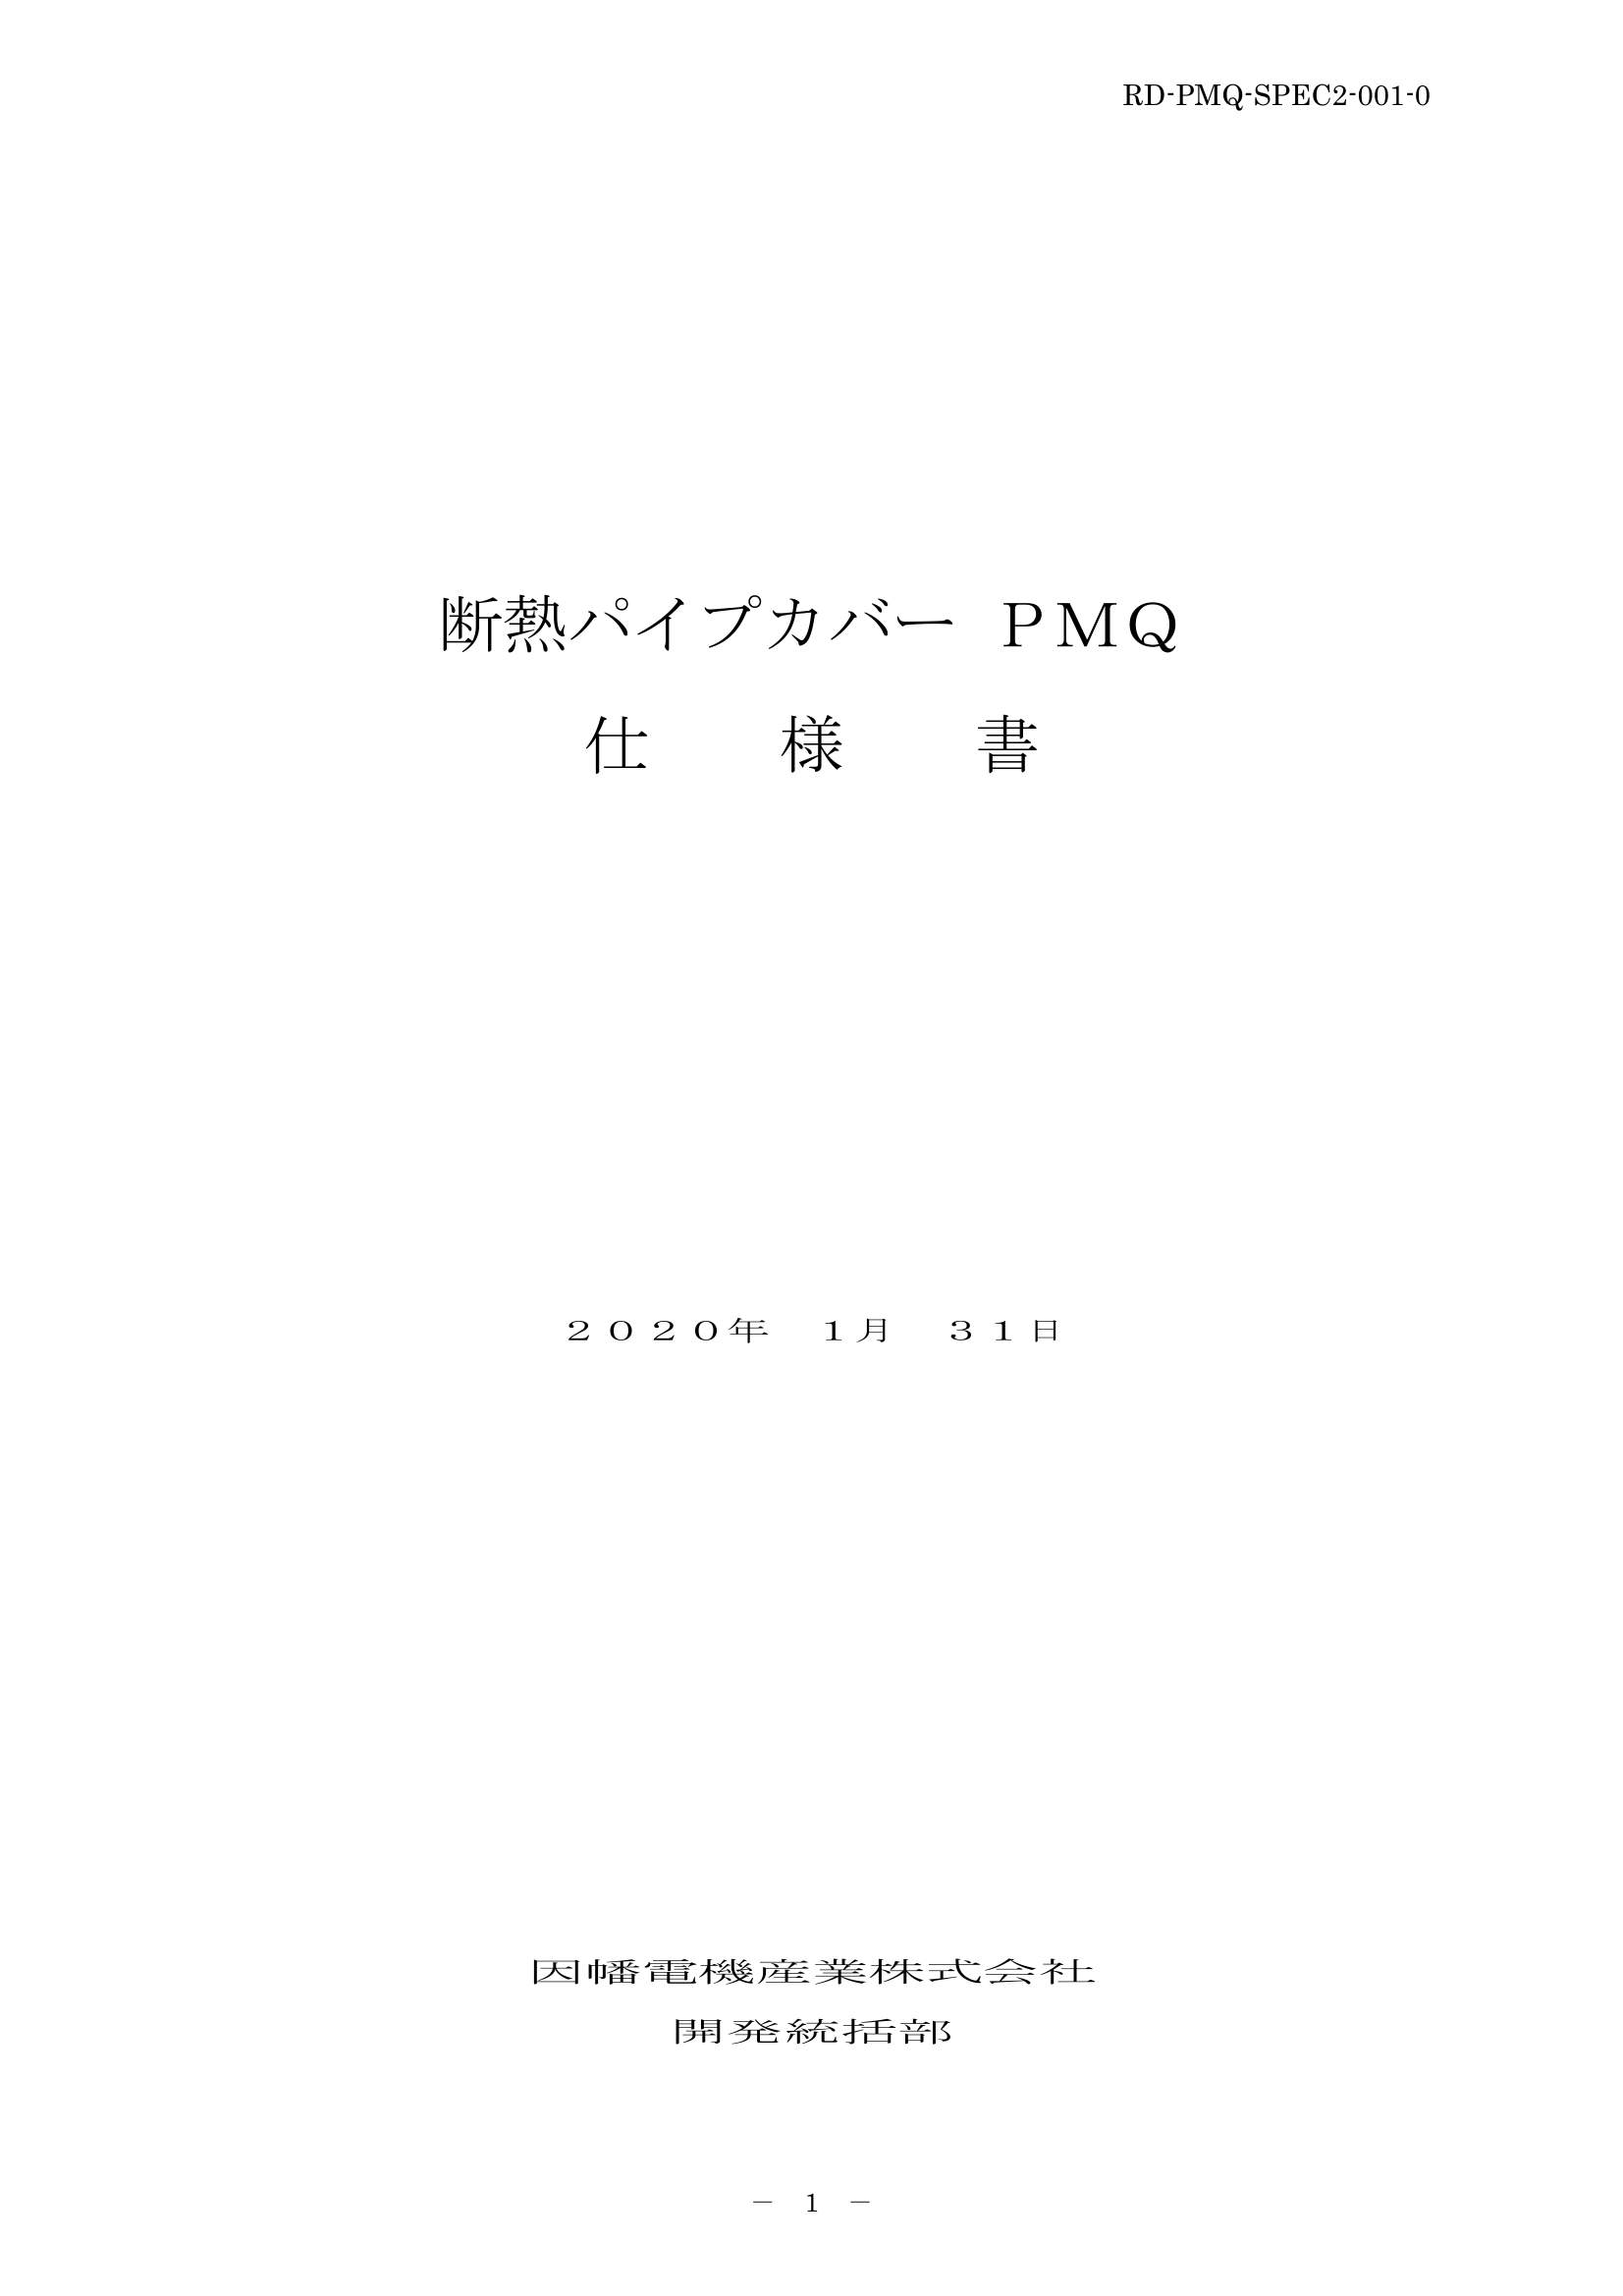 PMQ_仕様書_20200131.pdf